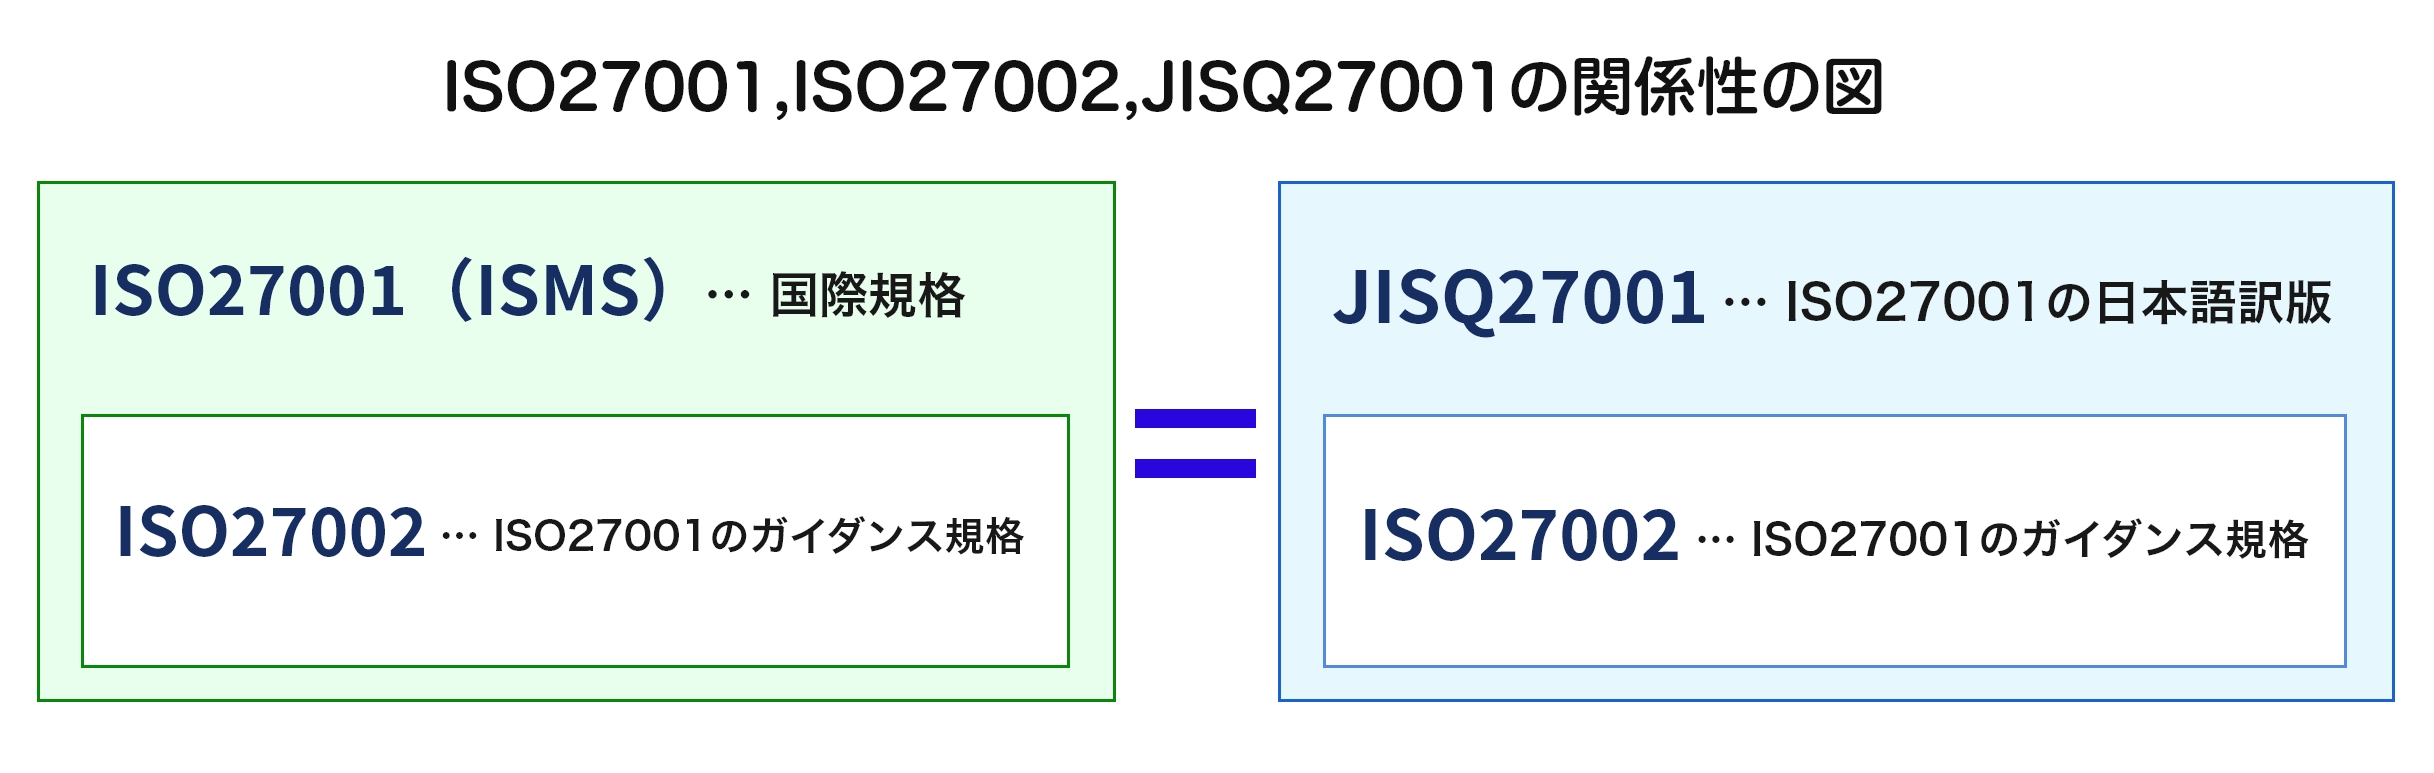 ISO27001、ISO27002、JISQ27001の関係性